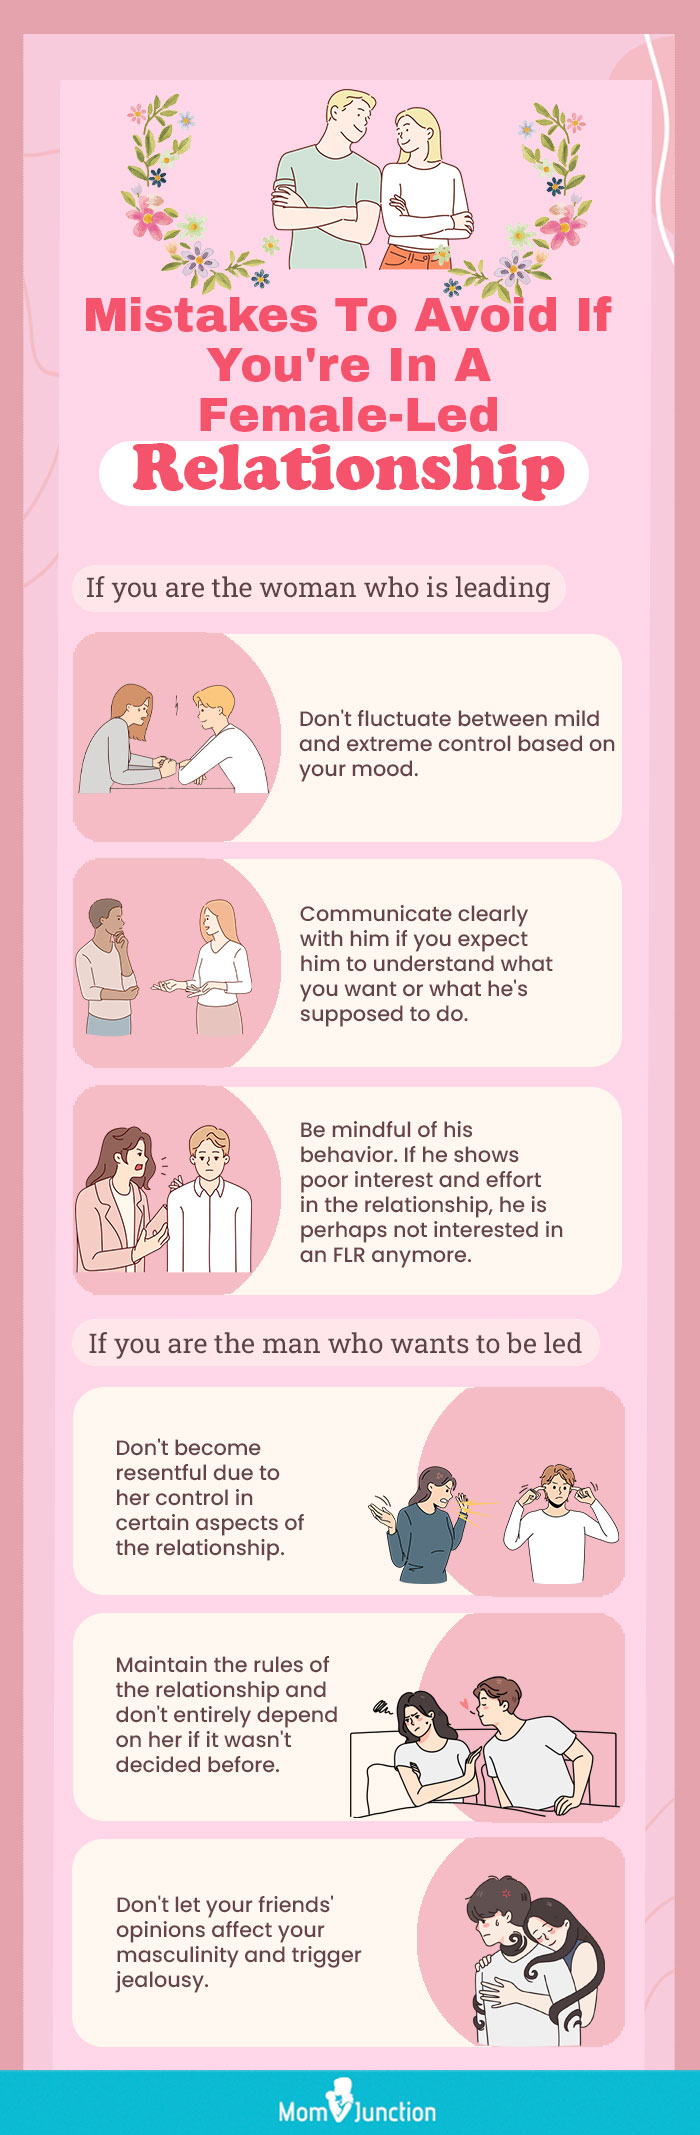 Female Relationship (FLR) Why Do Men Seek It?